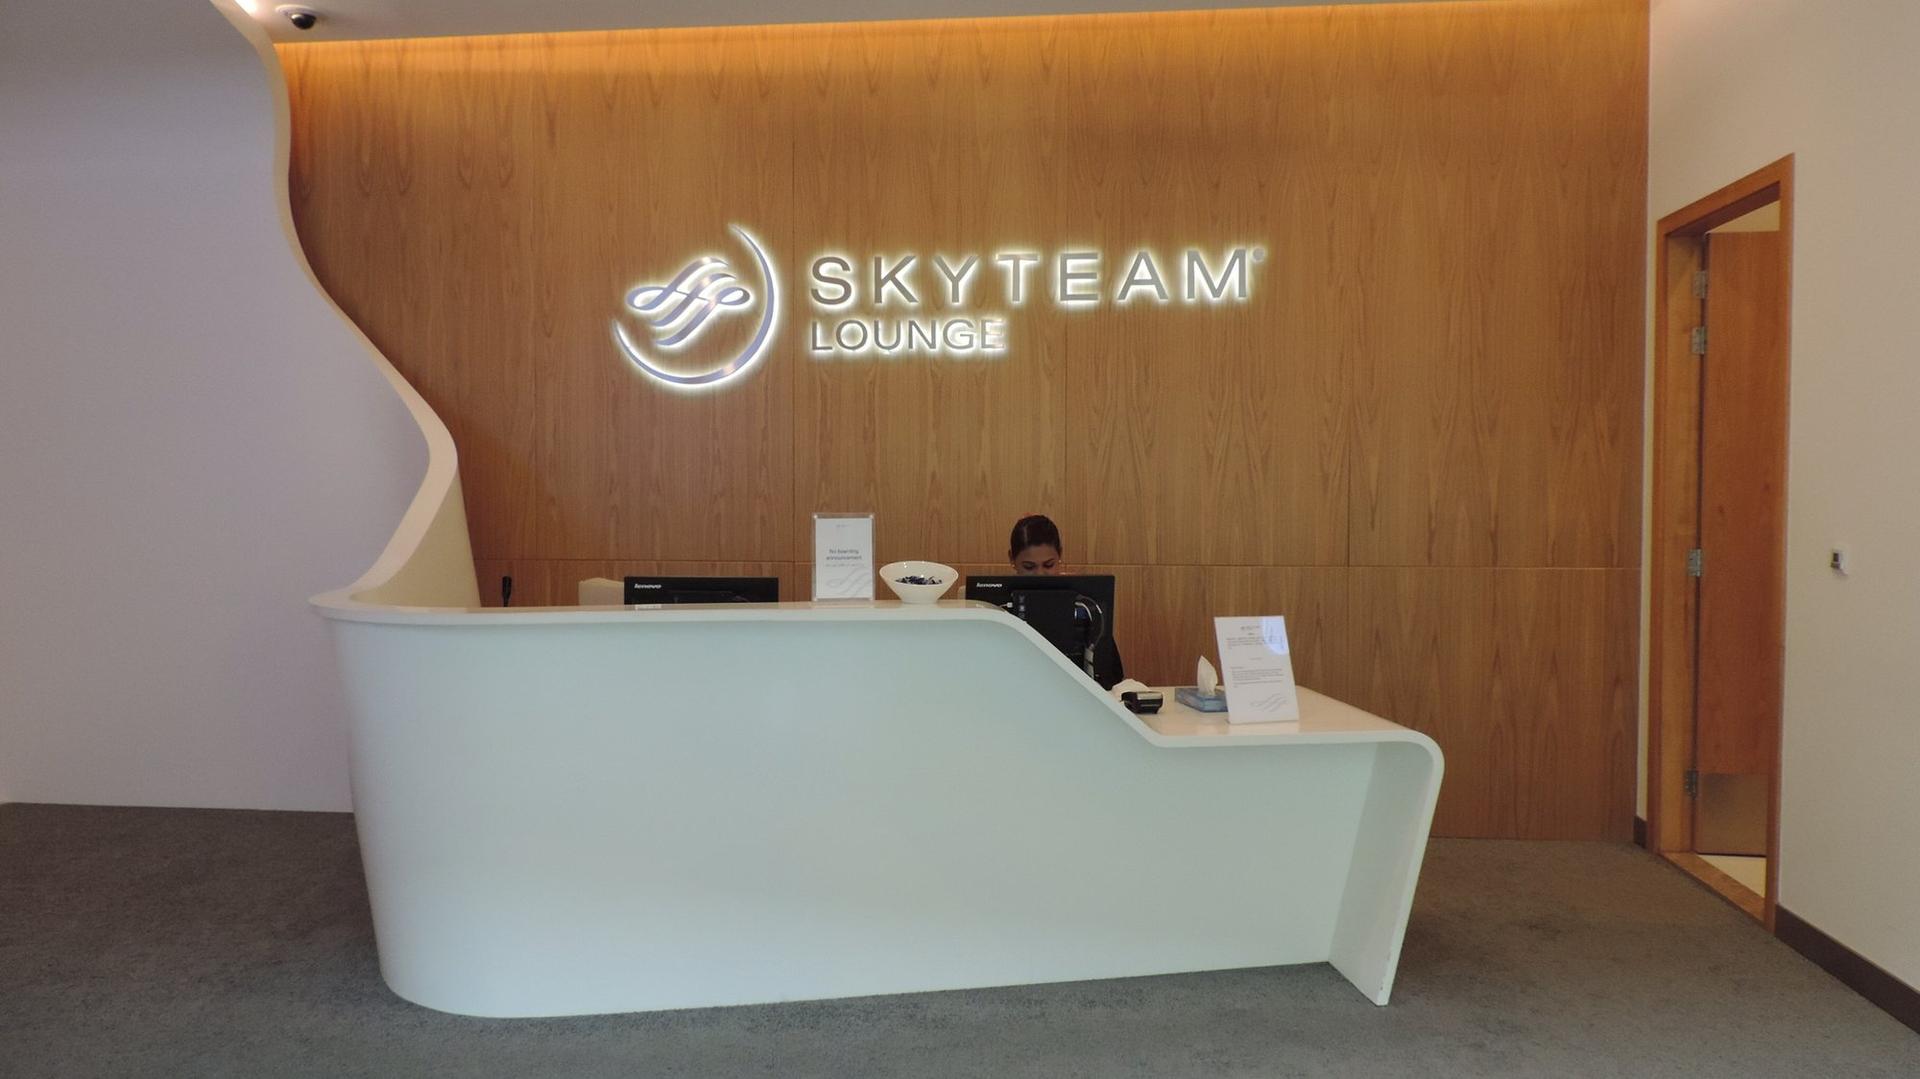 SkyTeam Lounge image 15 of 31